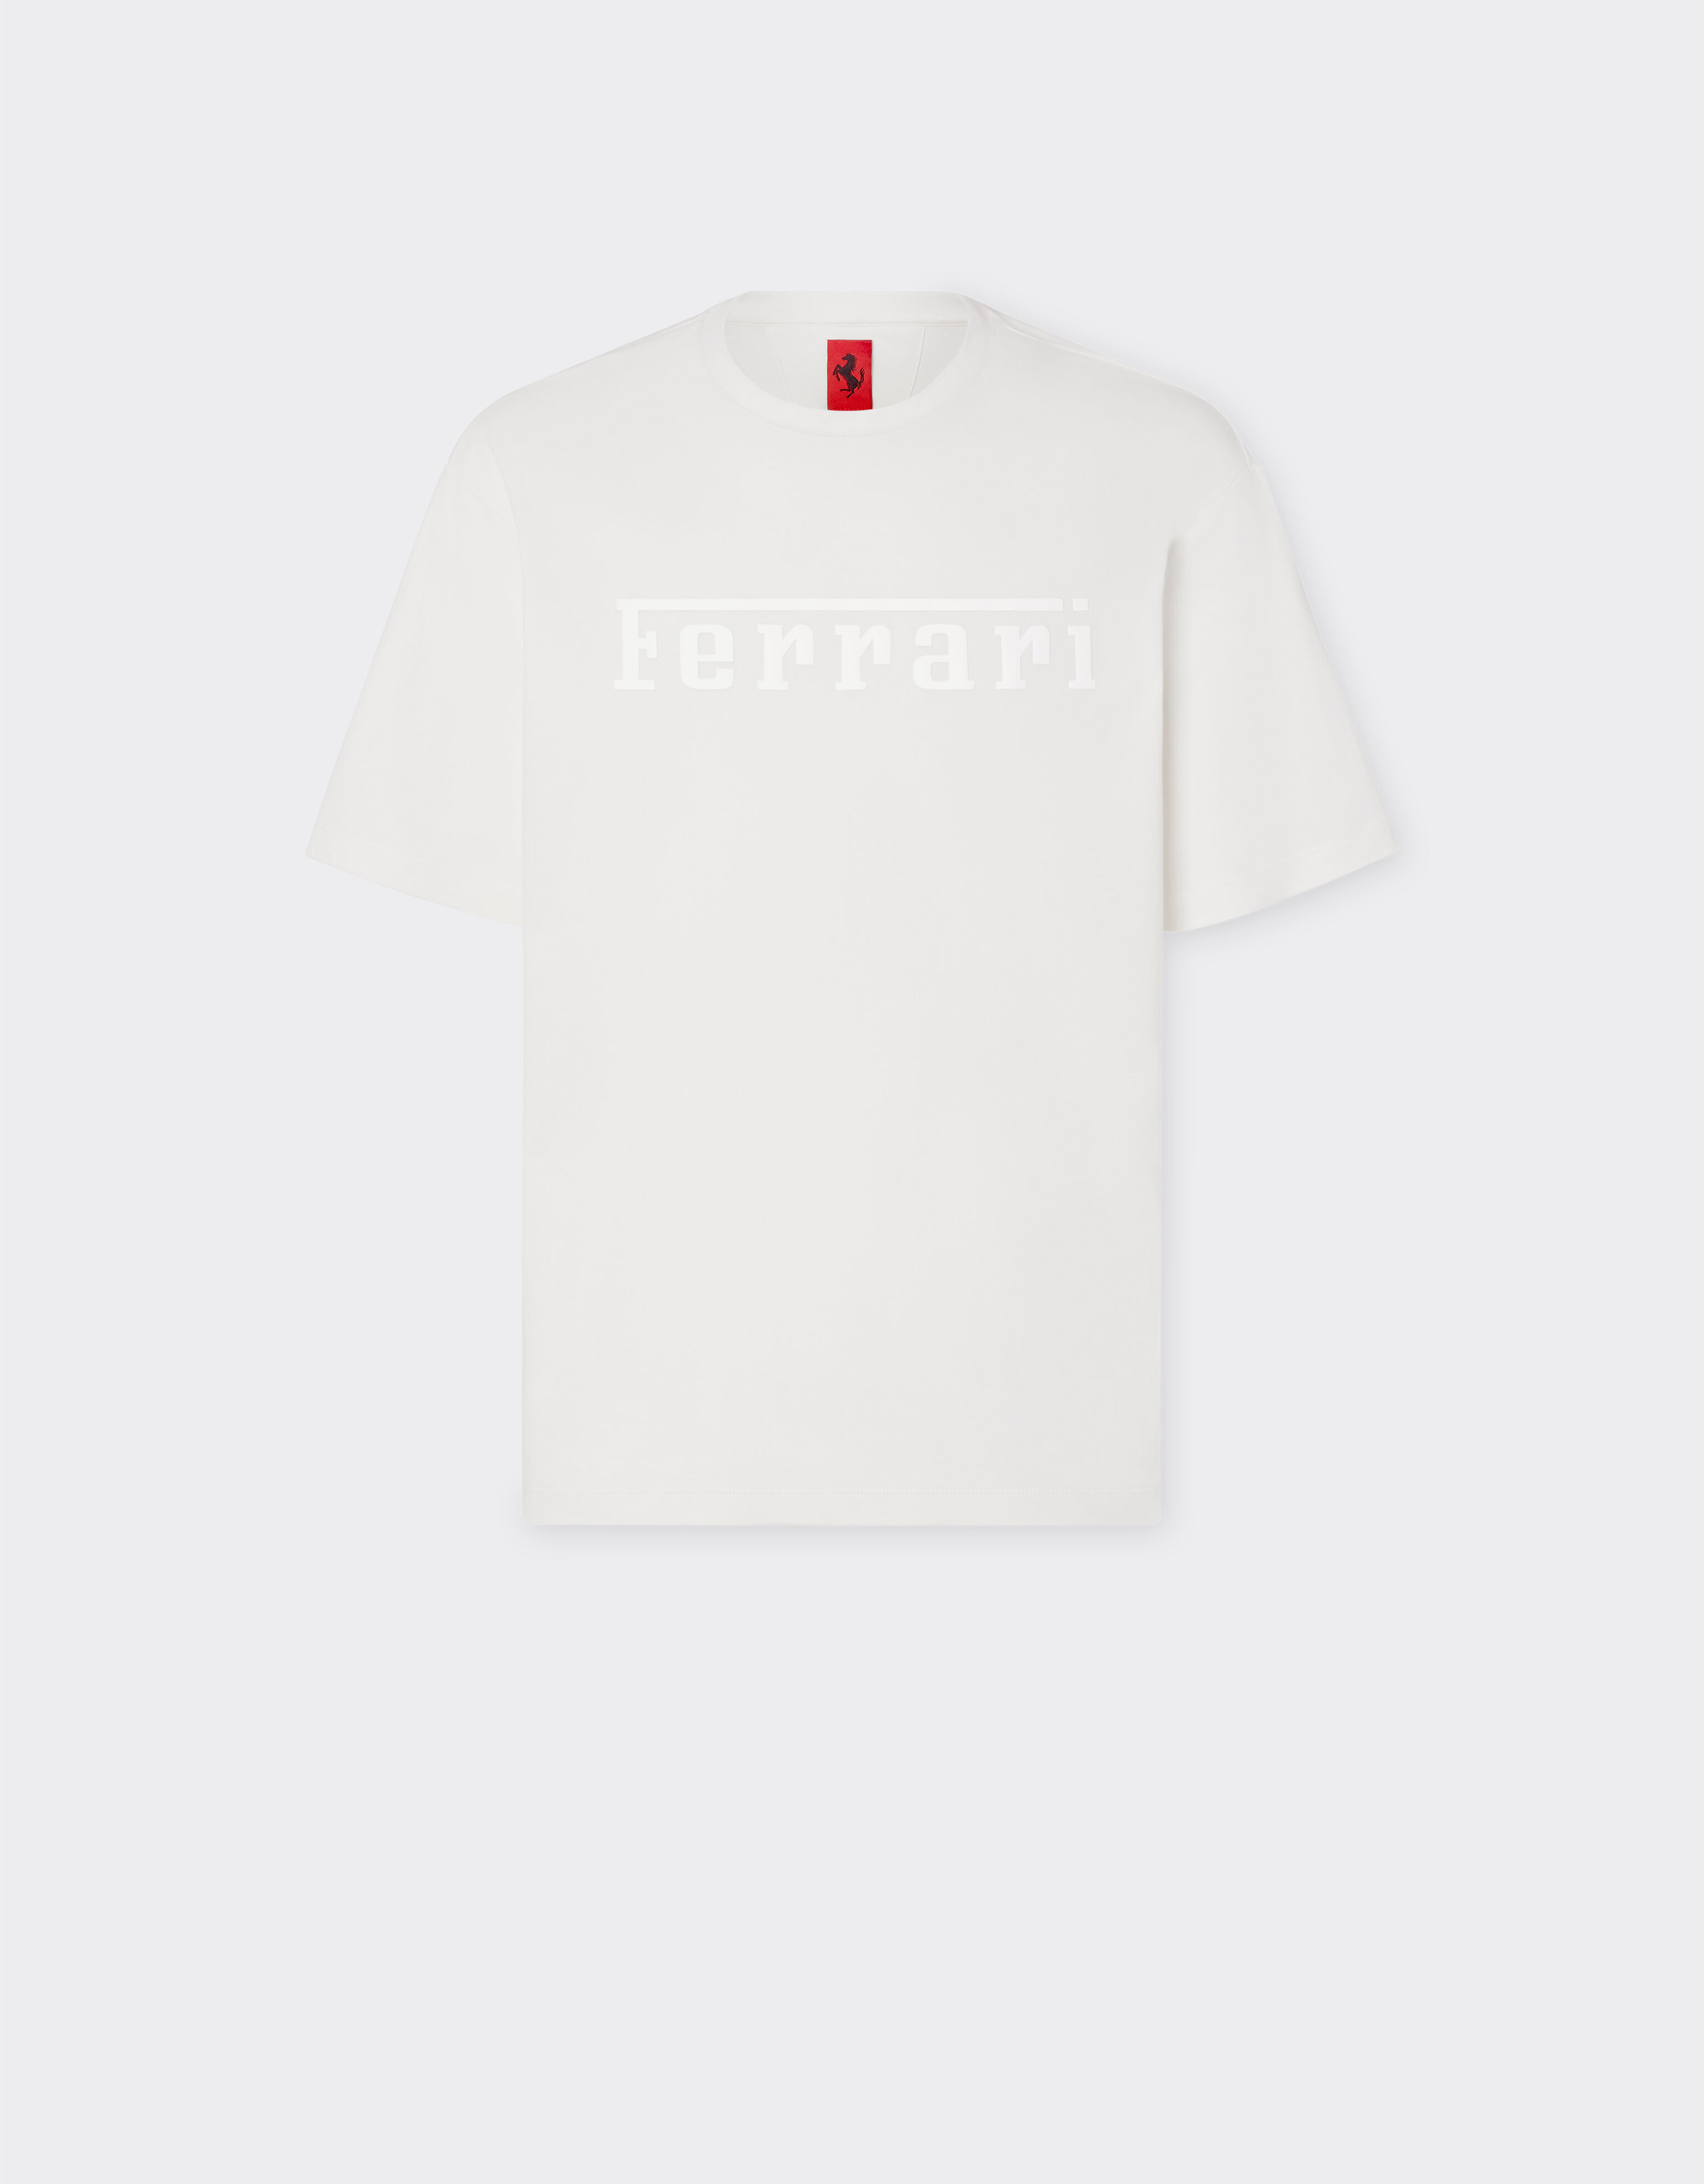 Ferrari Cotton T-shirt with Ferrari logo Rosso Corsa 20007f